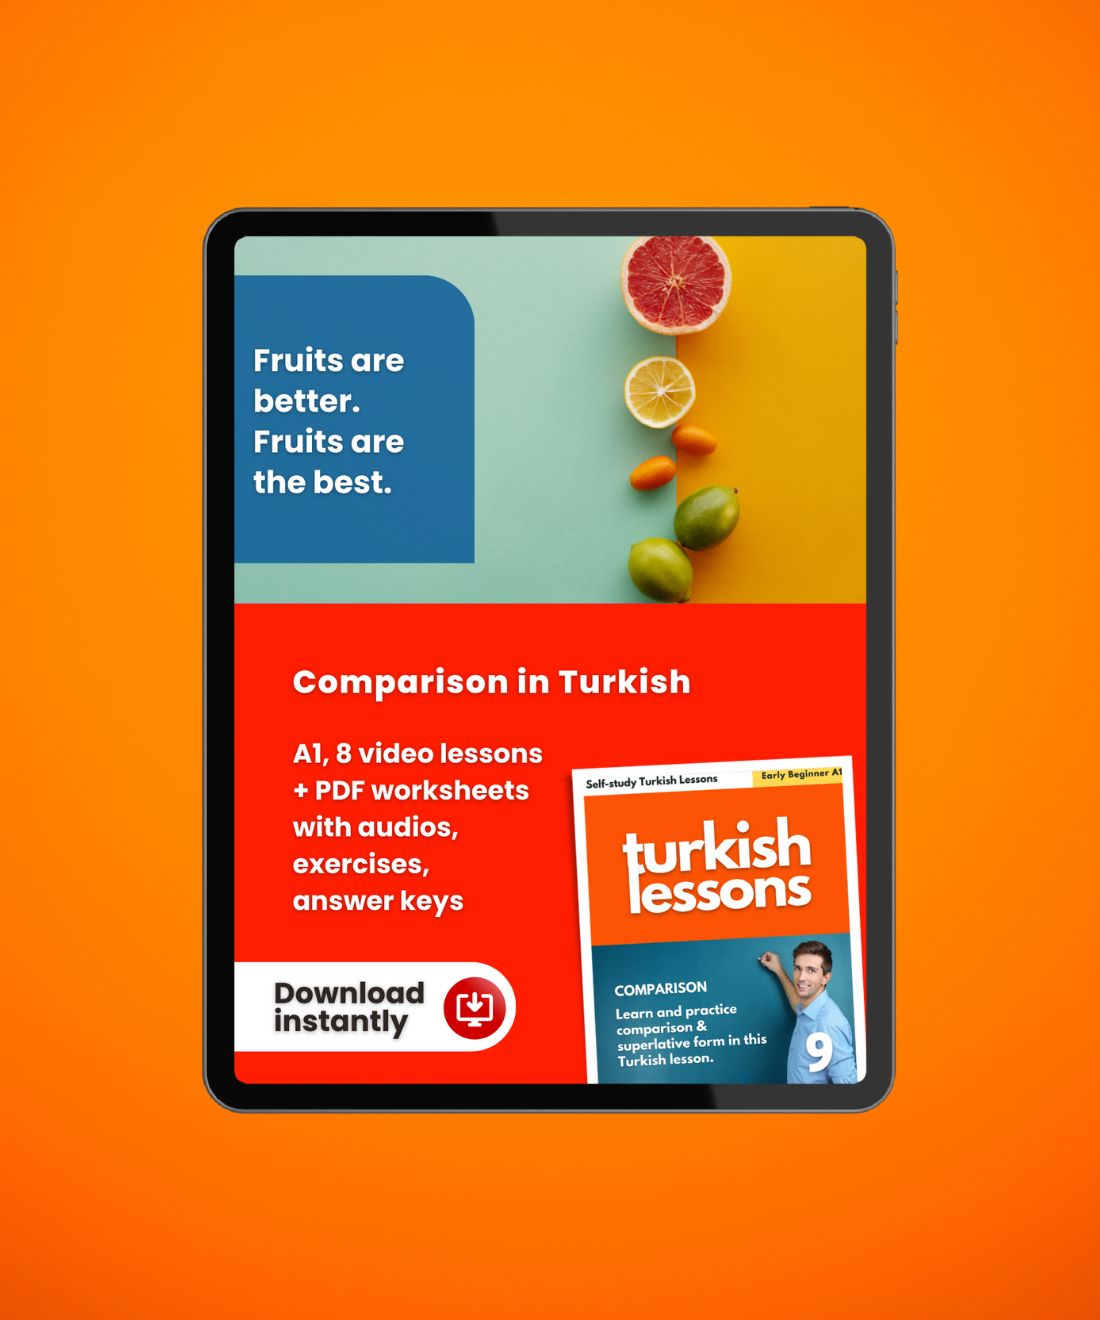 turkish lessons a1 - comparison in turkish language